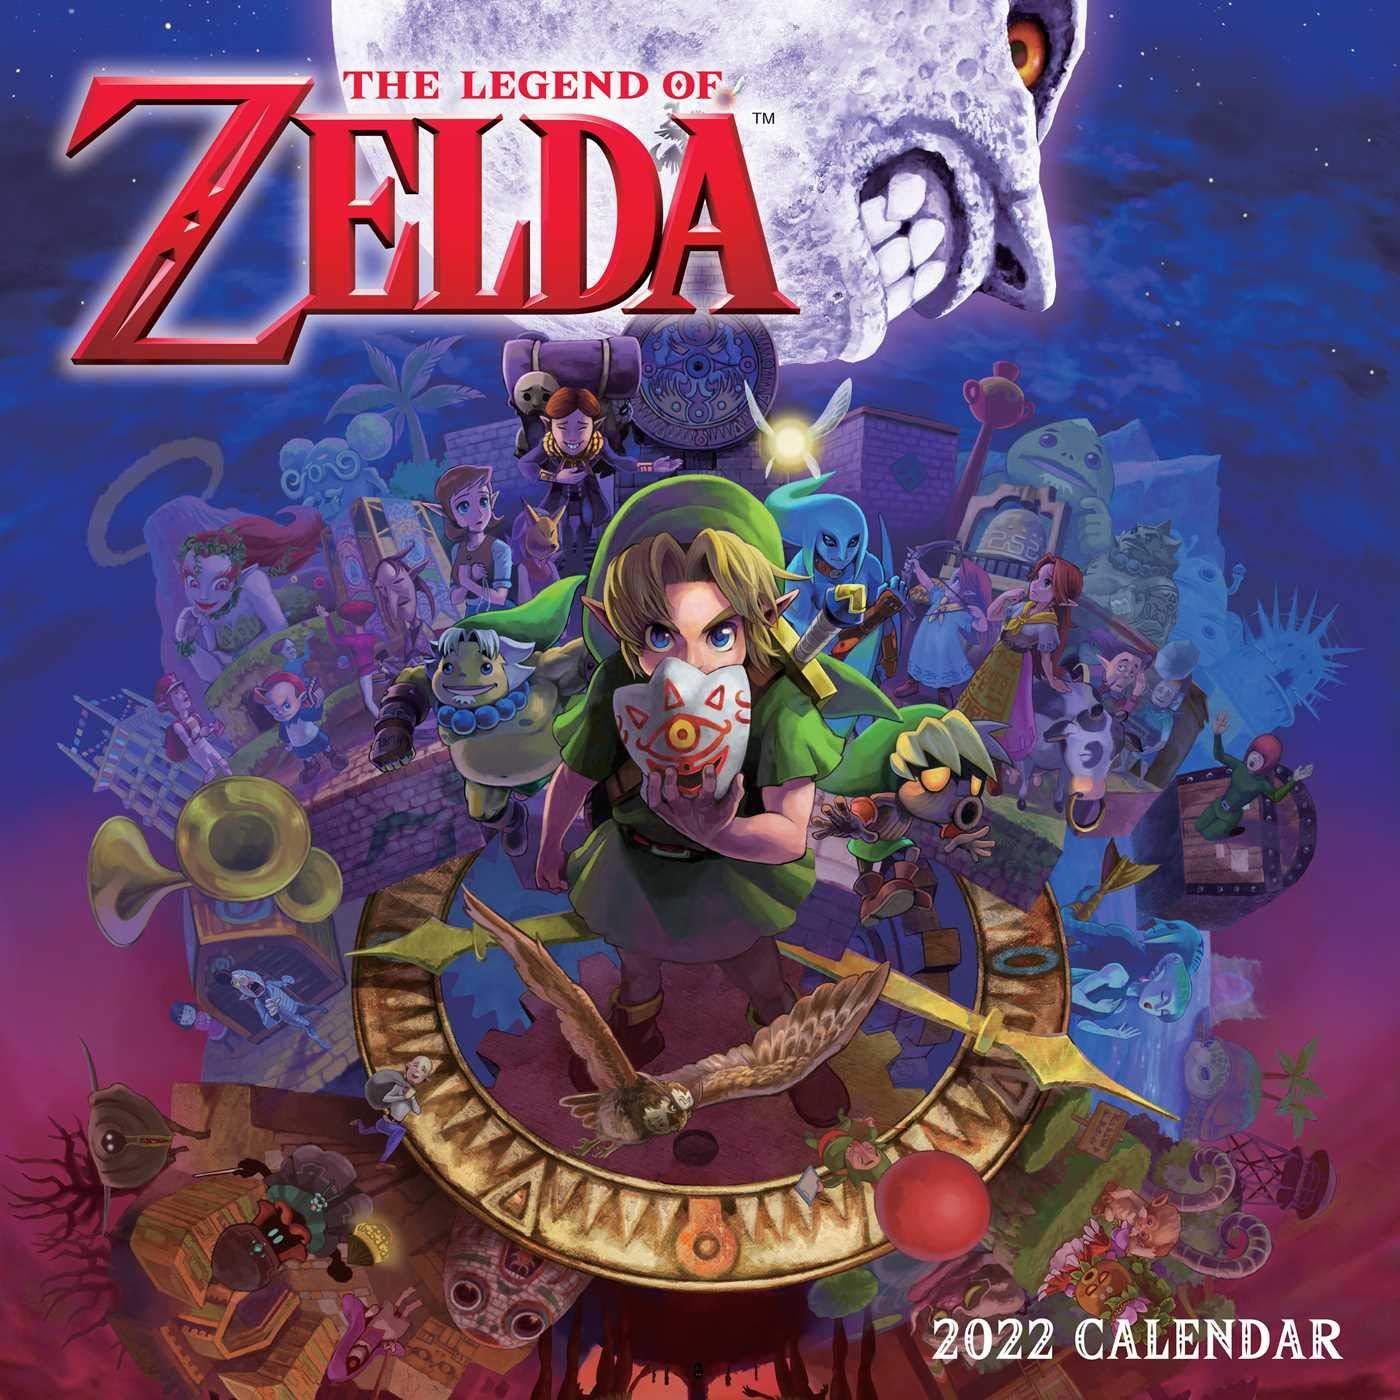 The Legend of Zelda 2022 Wall Calendar for $7.49